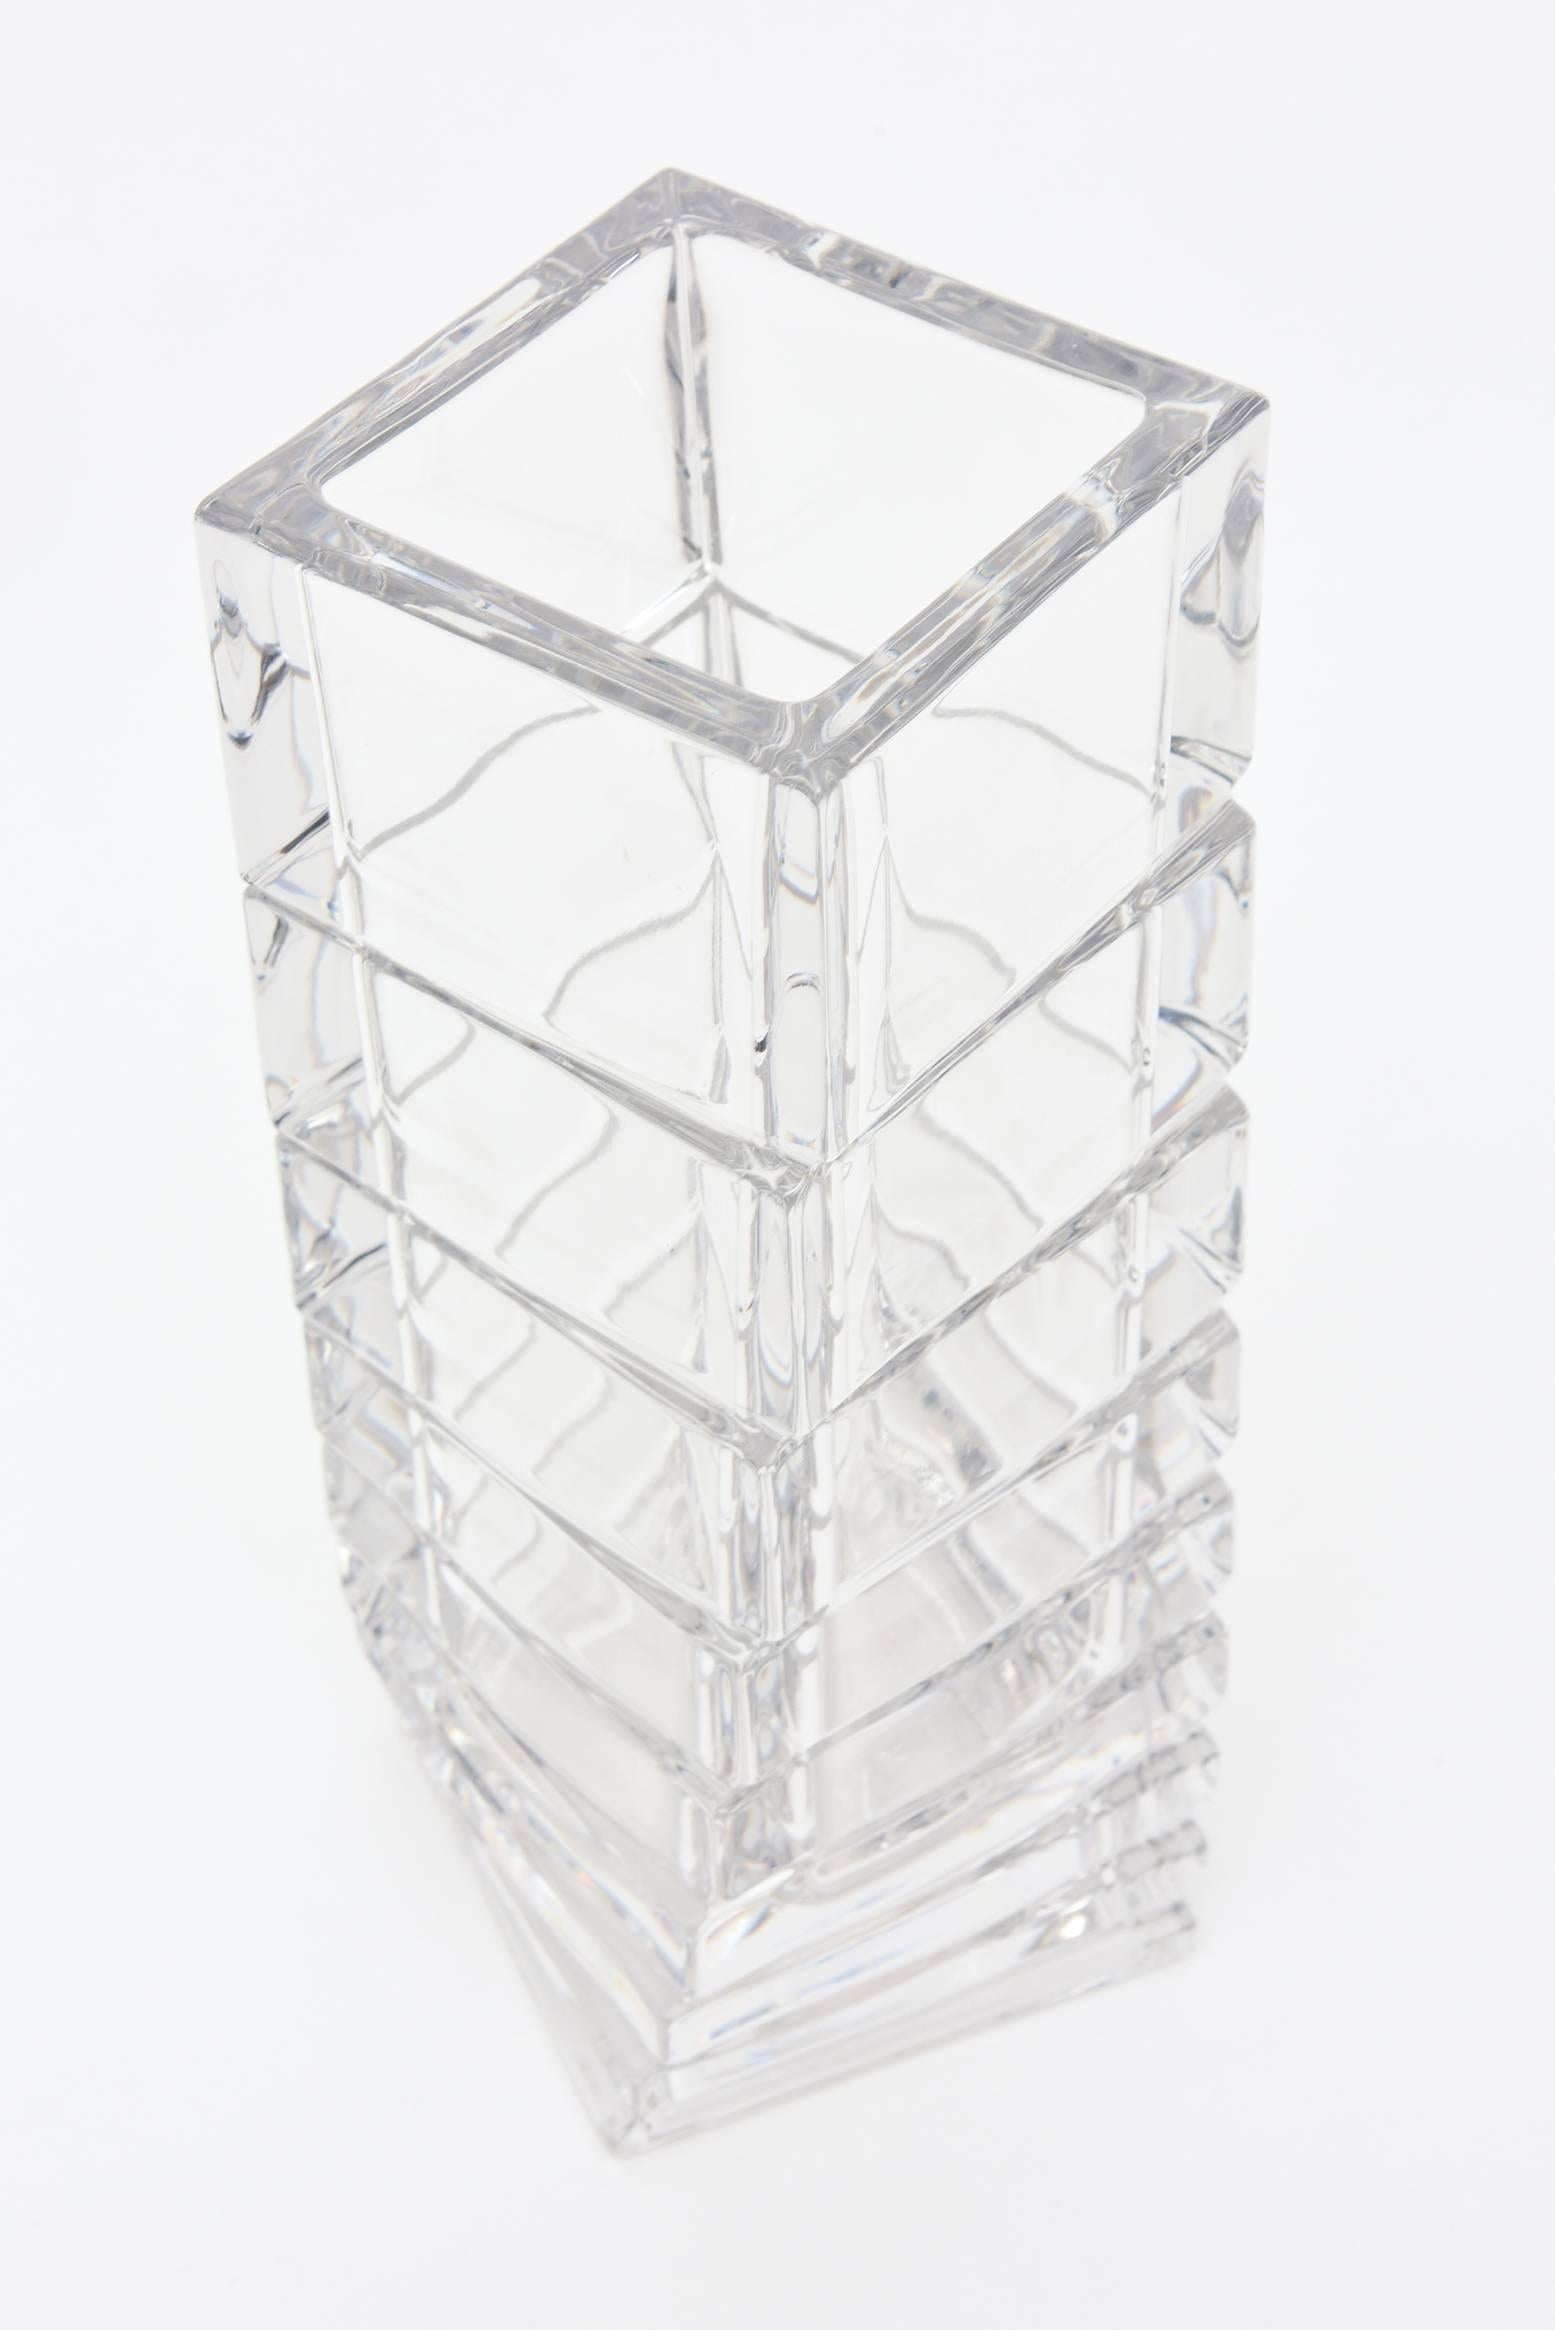 Rosenthal Skulpturale Vase aus gedrehtem Glas, Vintage, Mid-Century Modern (Moderne der Mitte des Jahrhunderts)